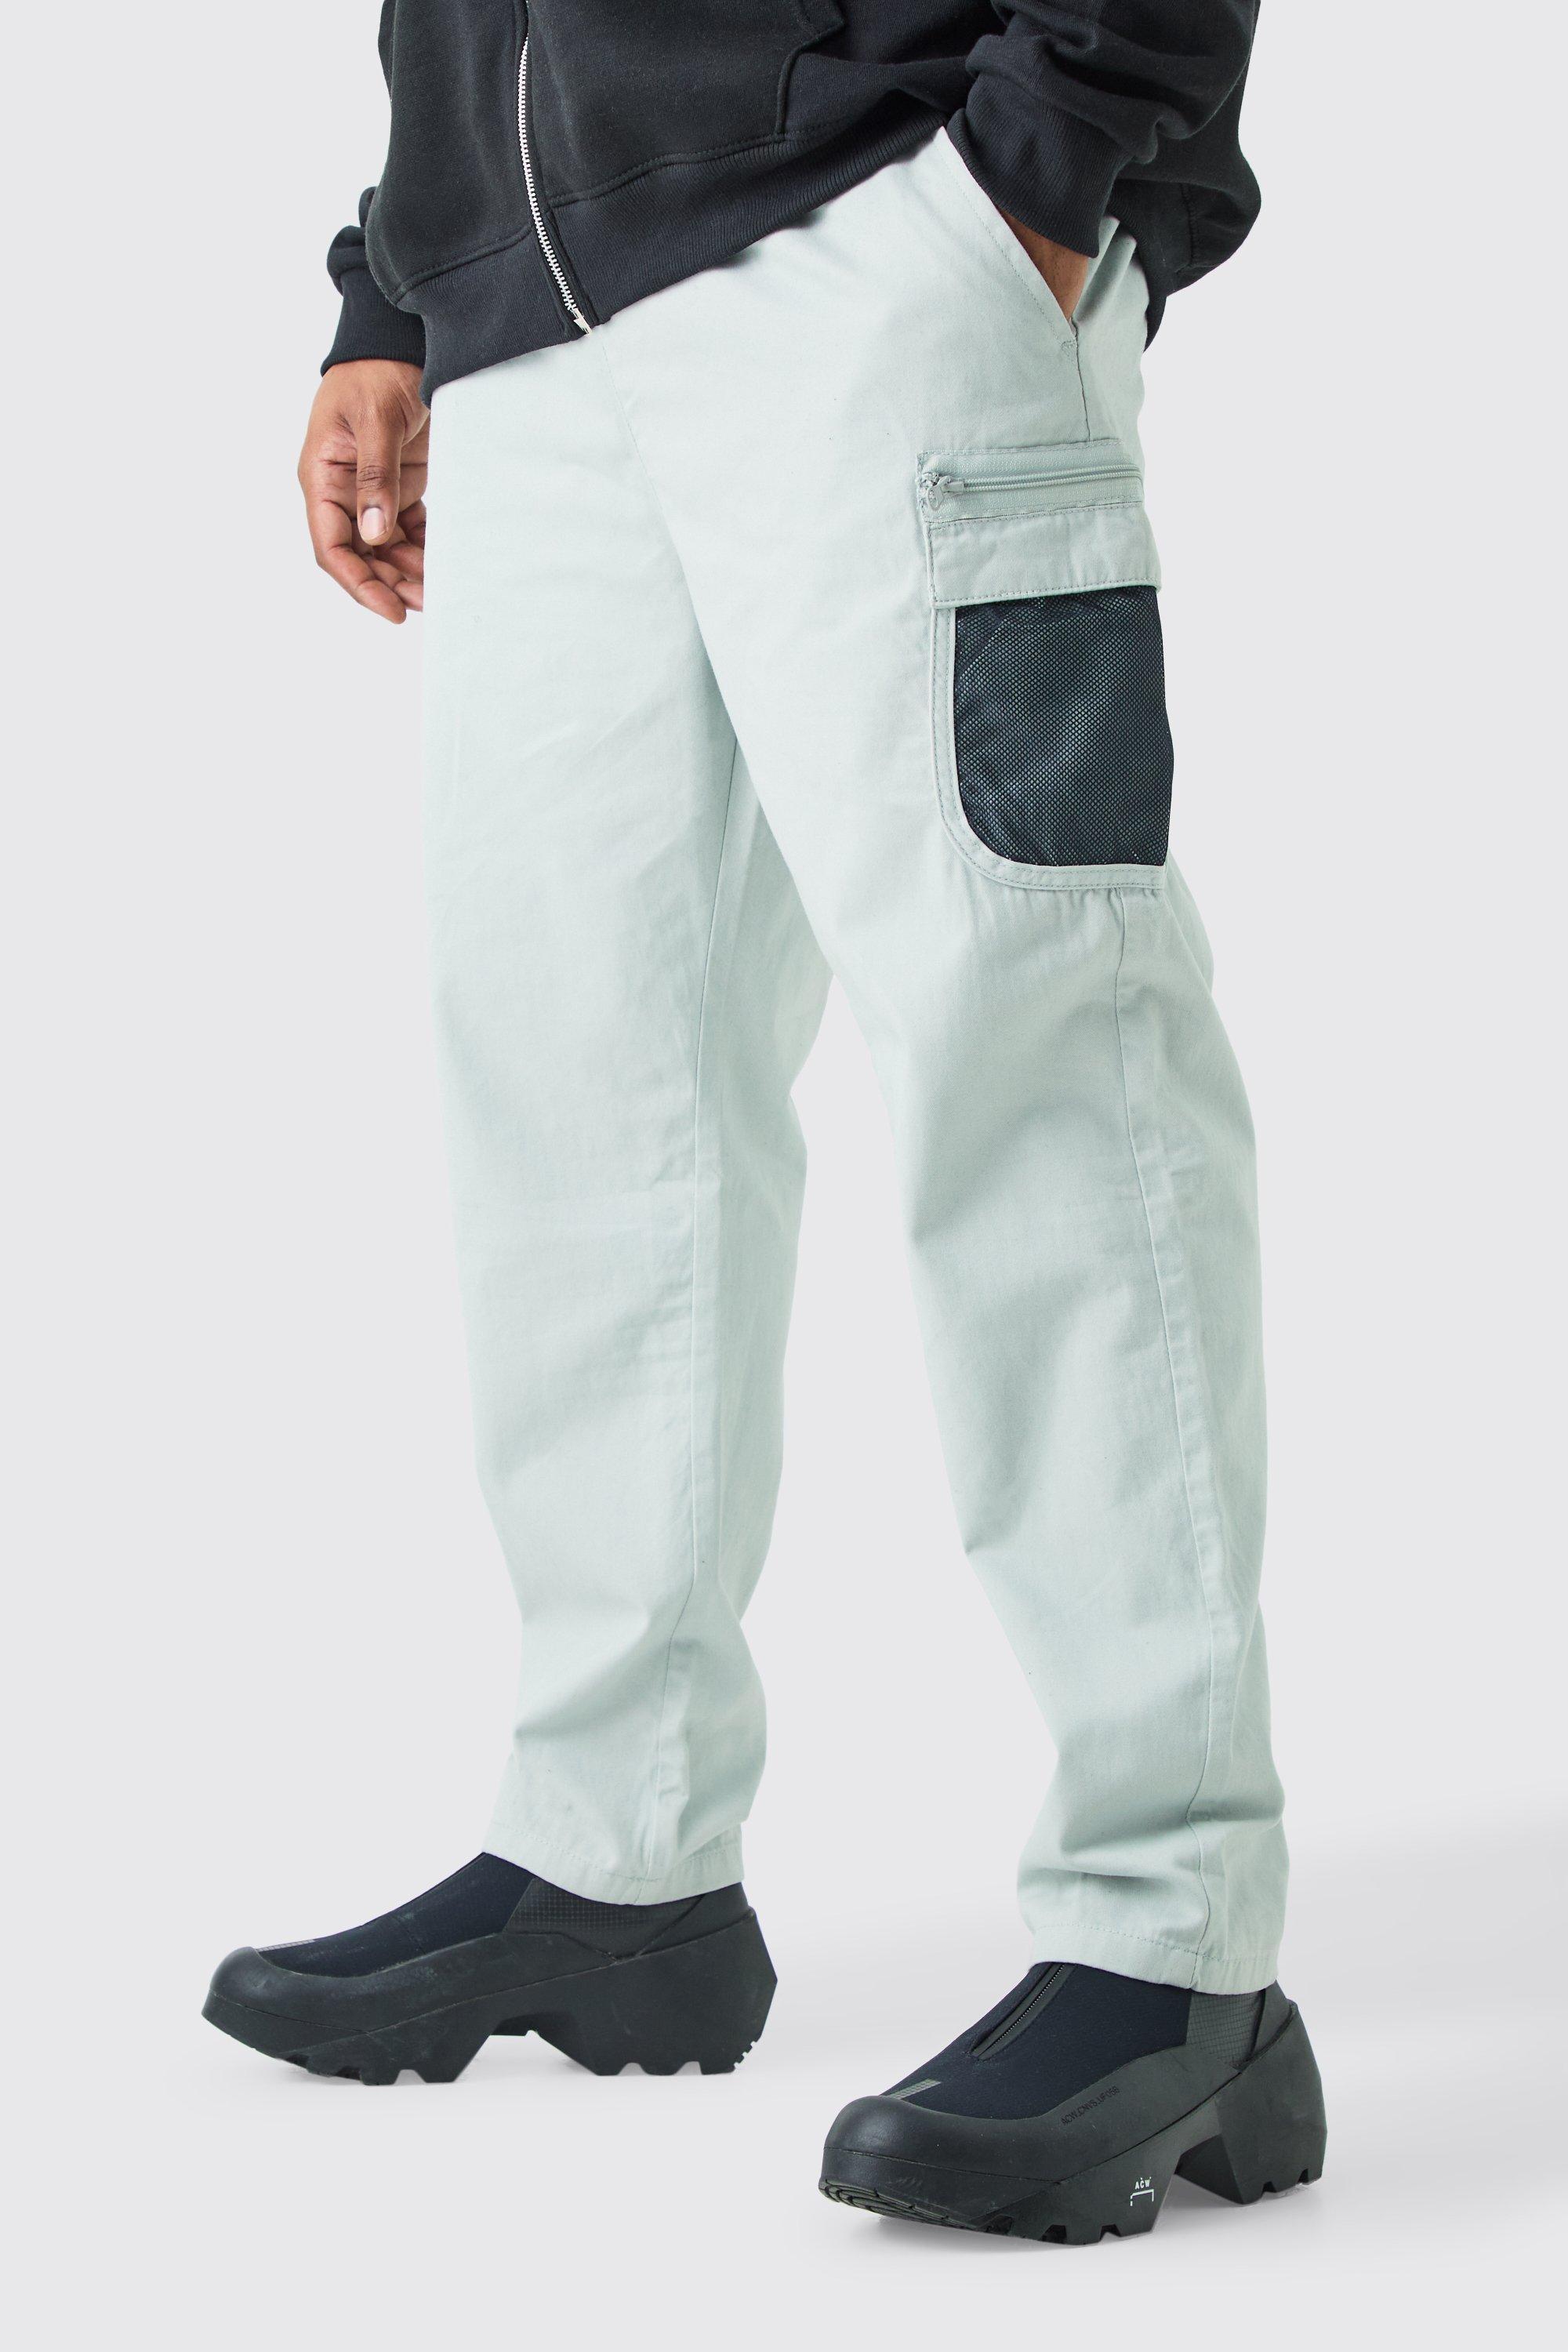 Boohoo Plus Elastic Comfort Mesh Pocket Cargo Trouser in Gray